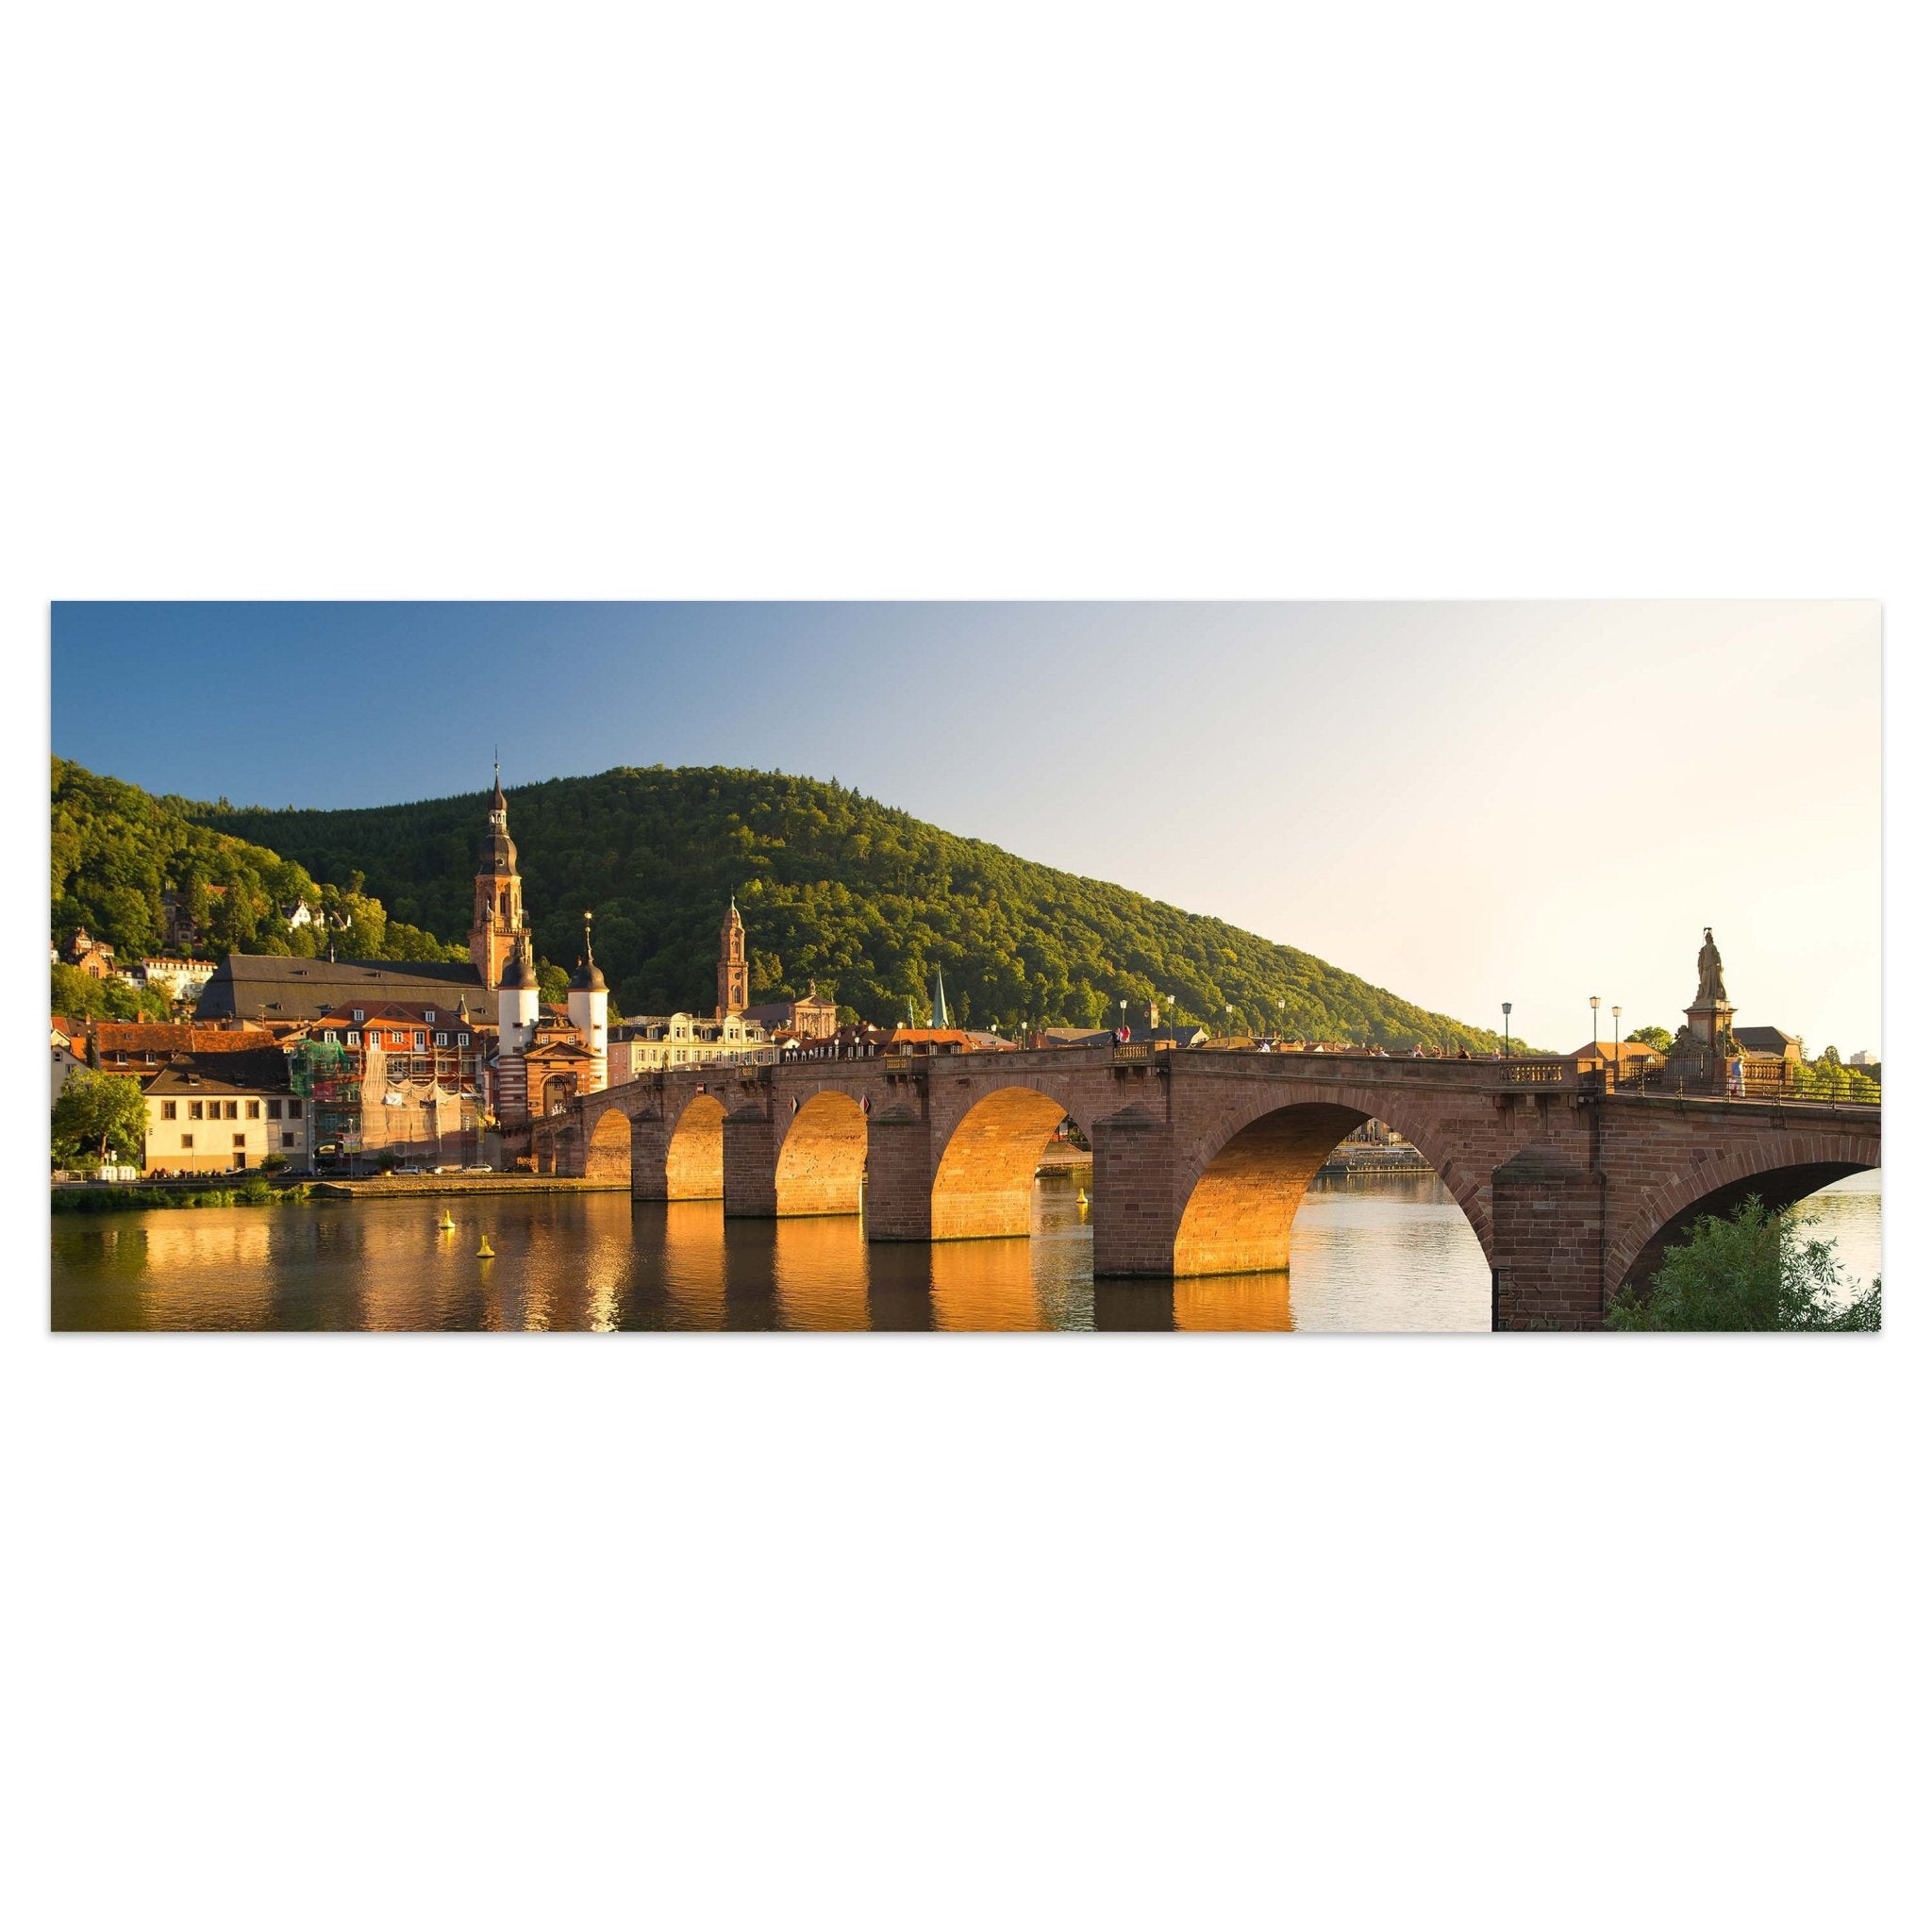 Leinwandbild Alte Brücke Heidelberg M0447 kaufen - Bild 1